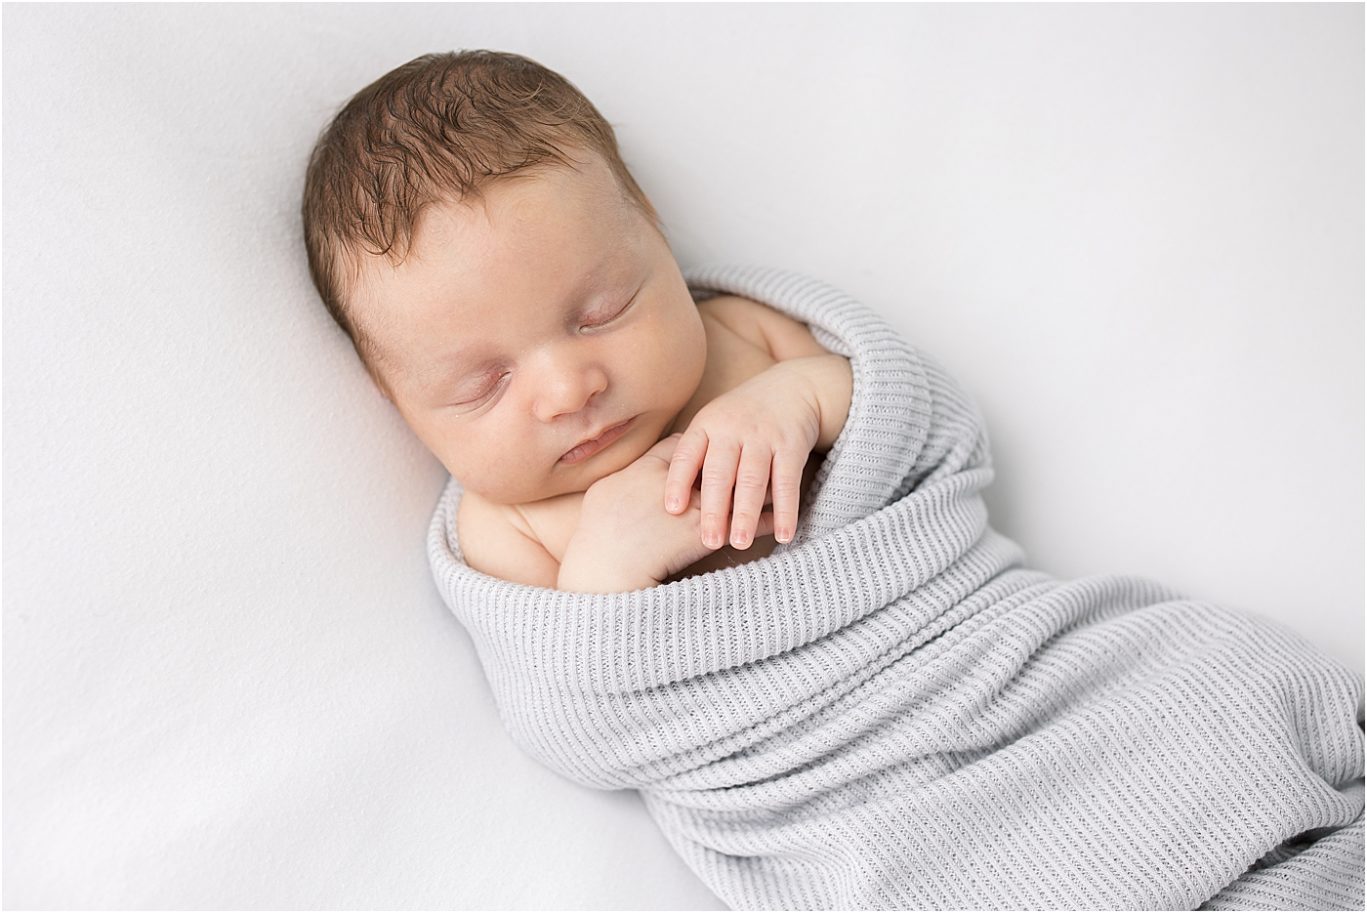 Newborn swaddled for photos | Lindsay Konopa Photography